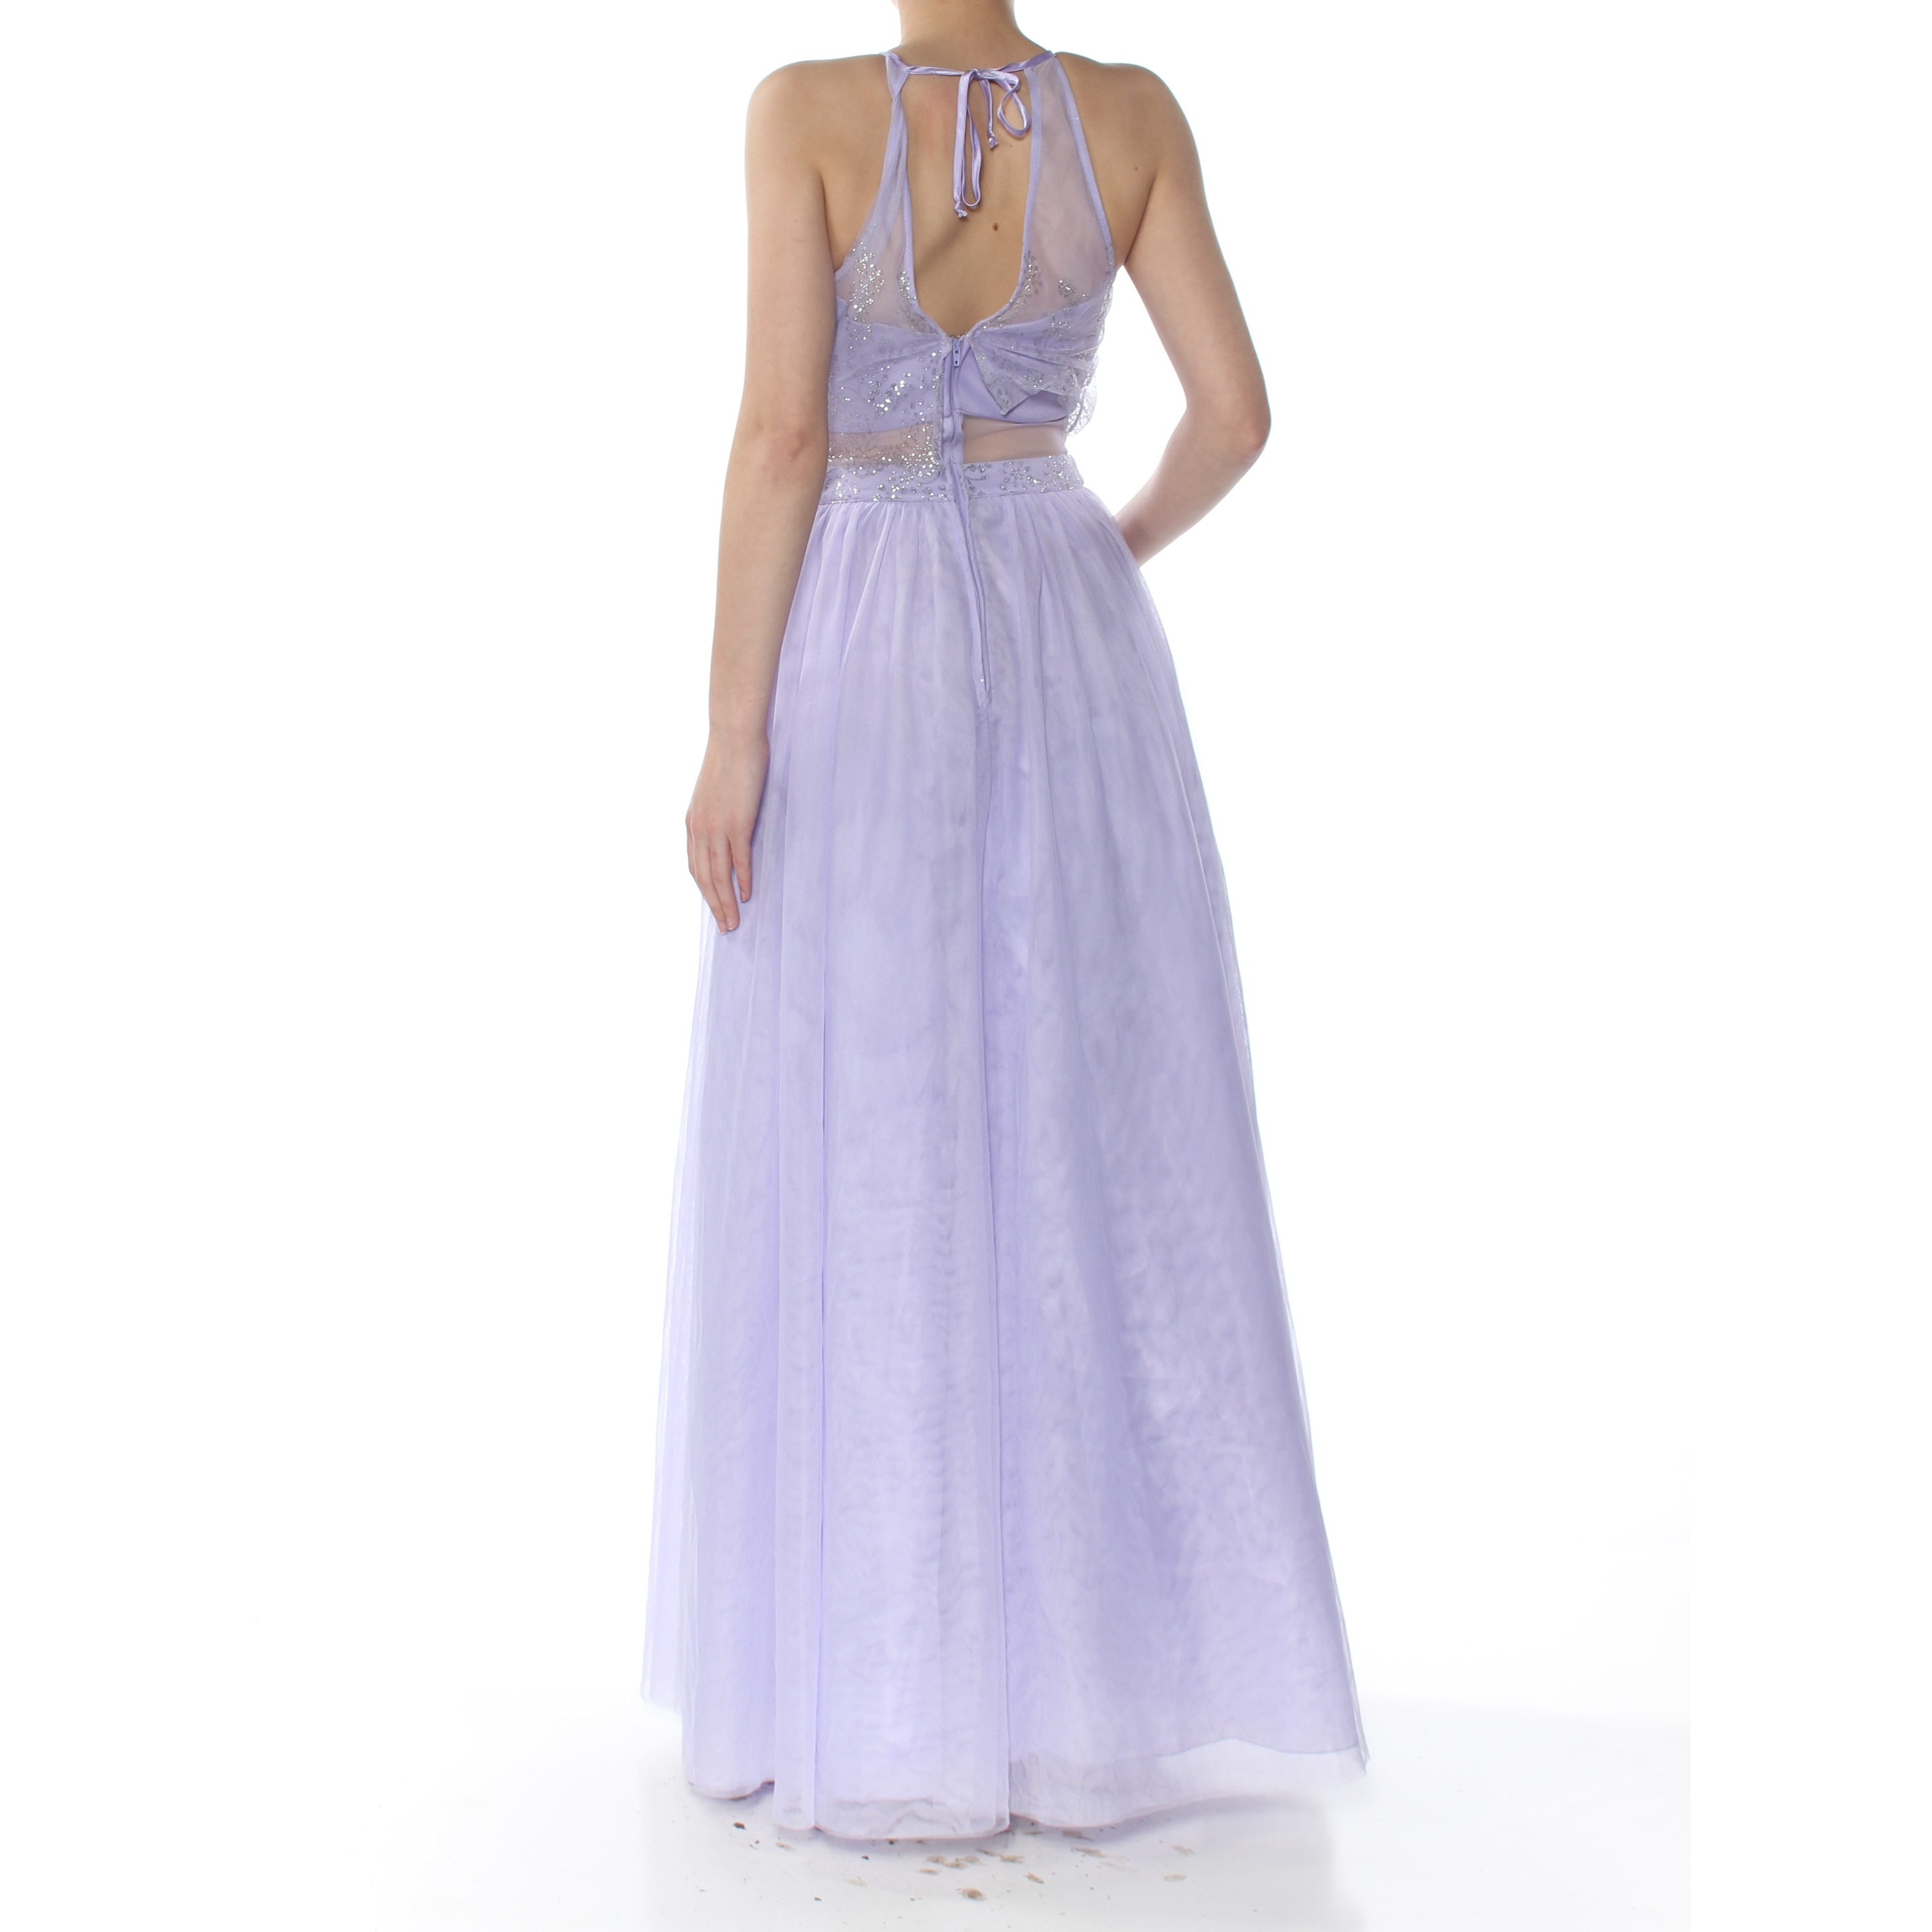 purple full length dress